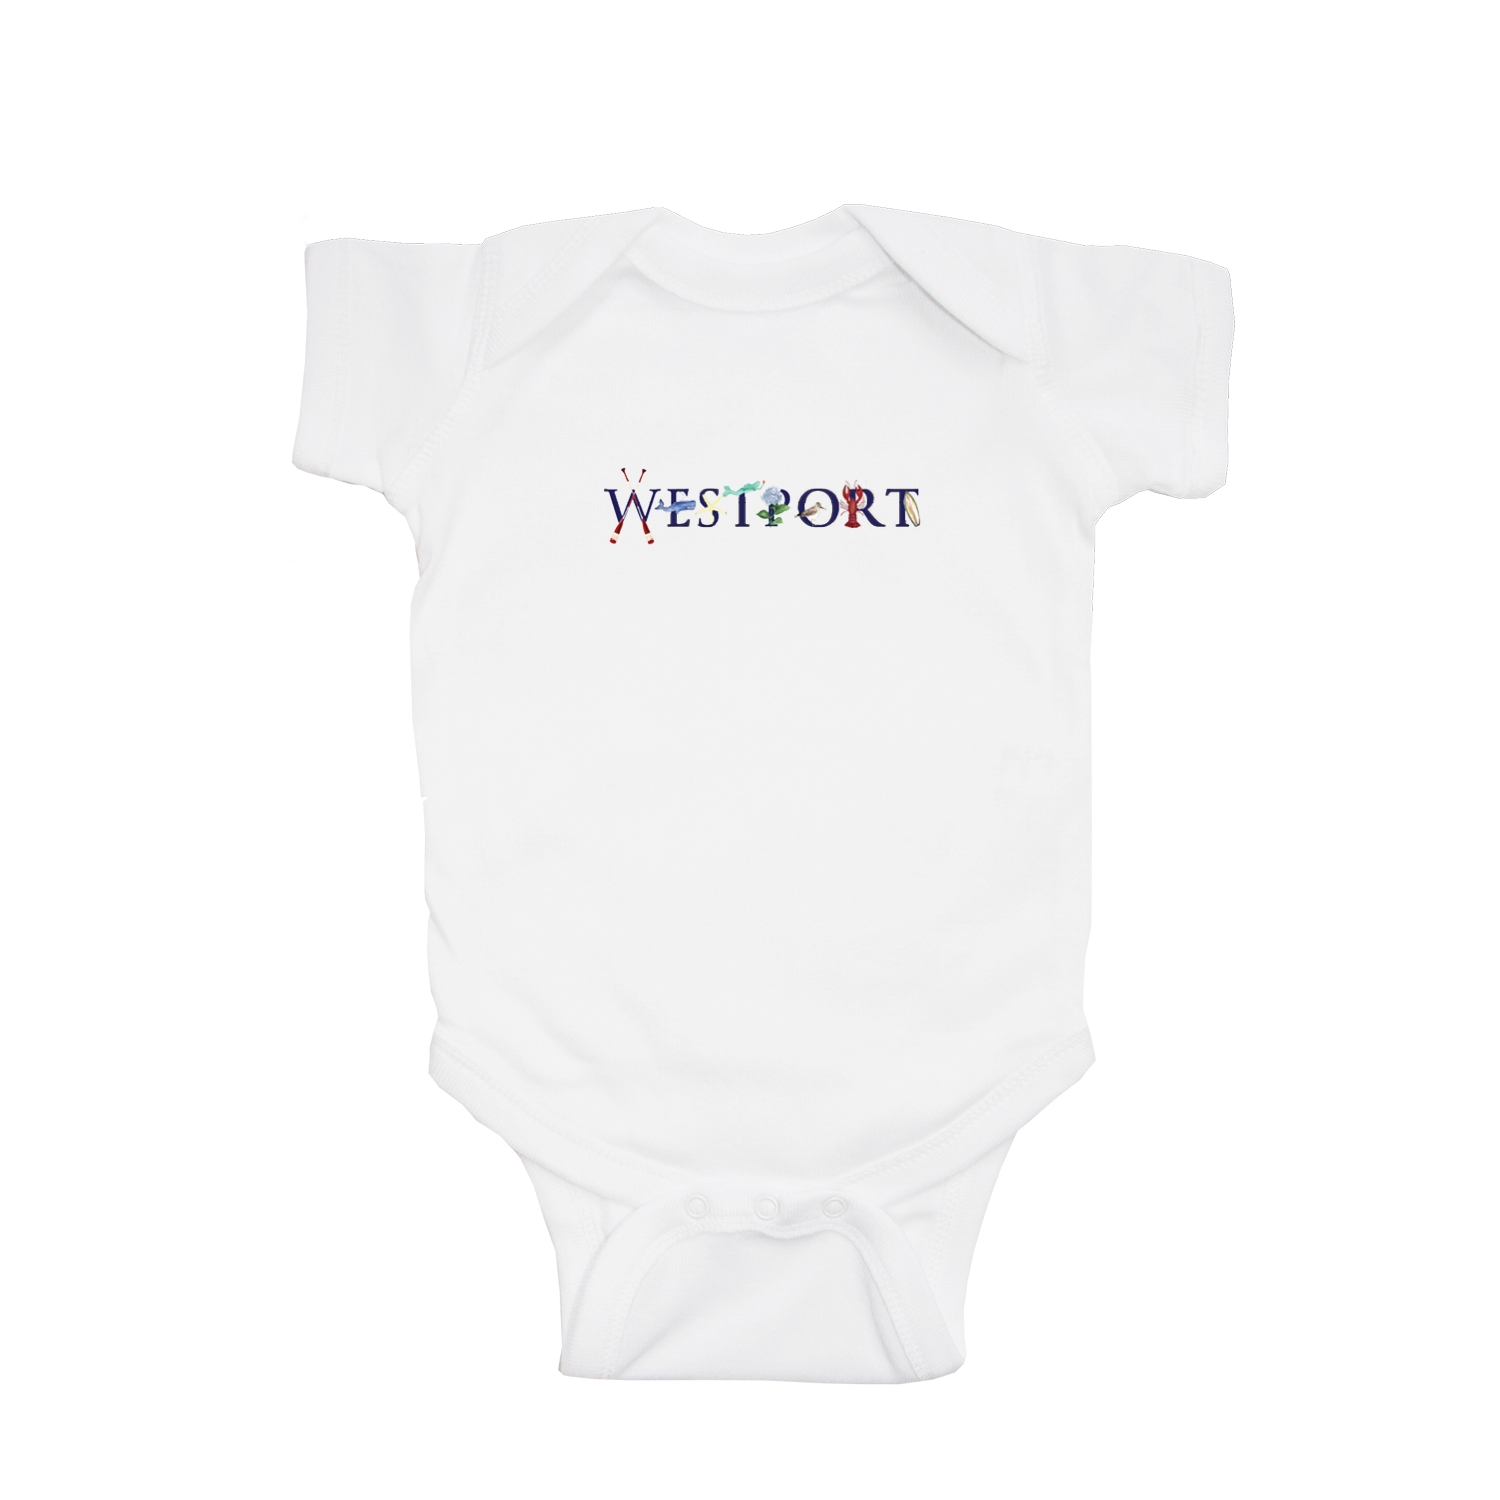 Westport baby snap up short sleeve